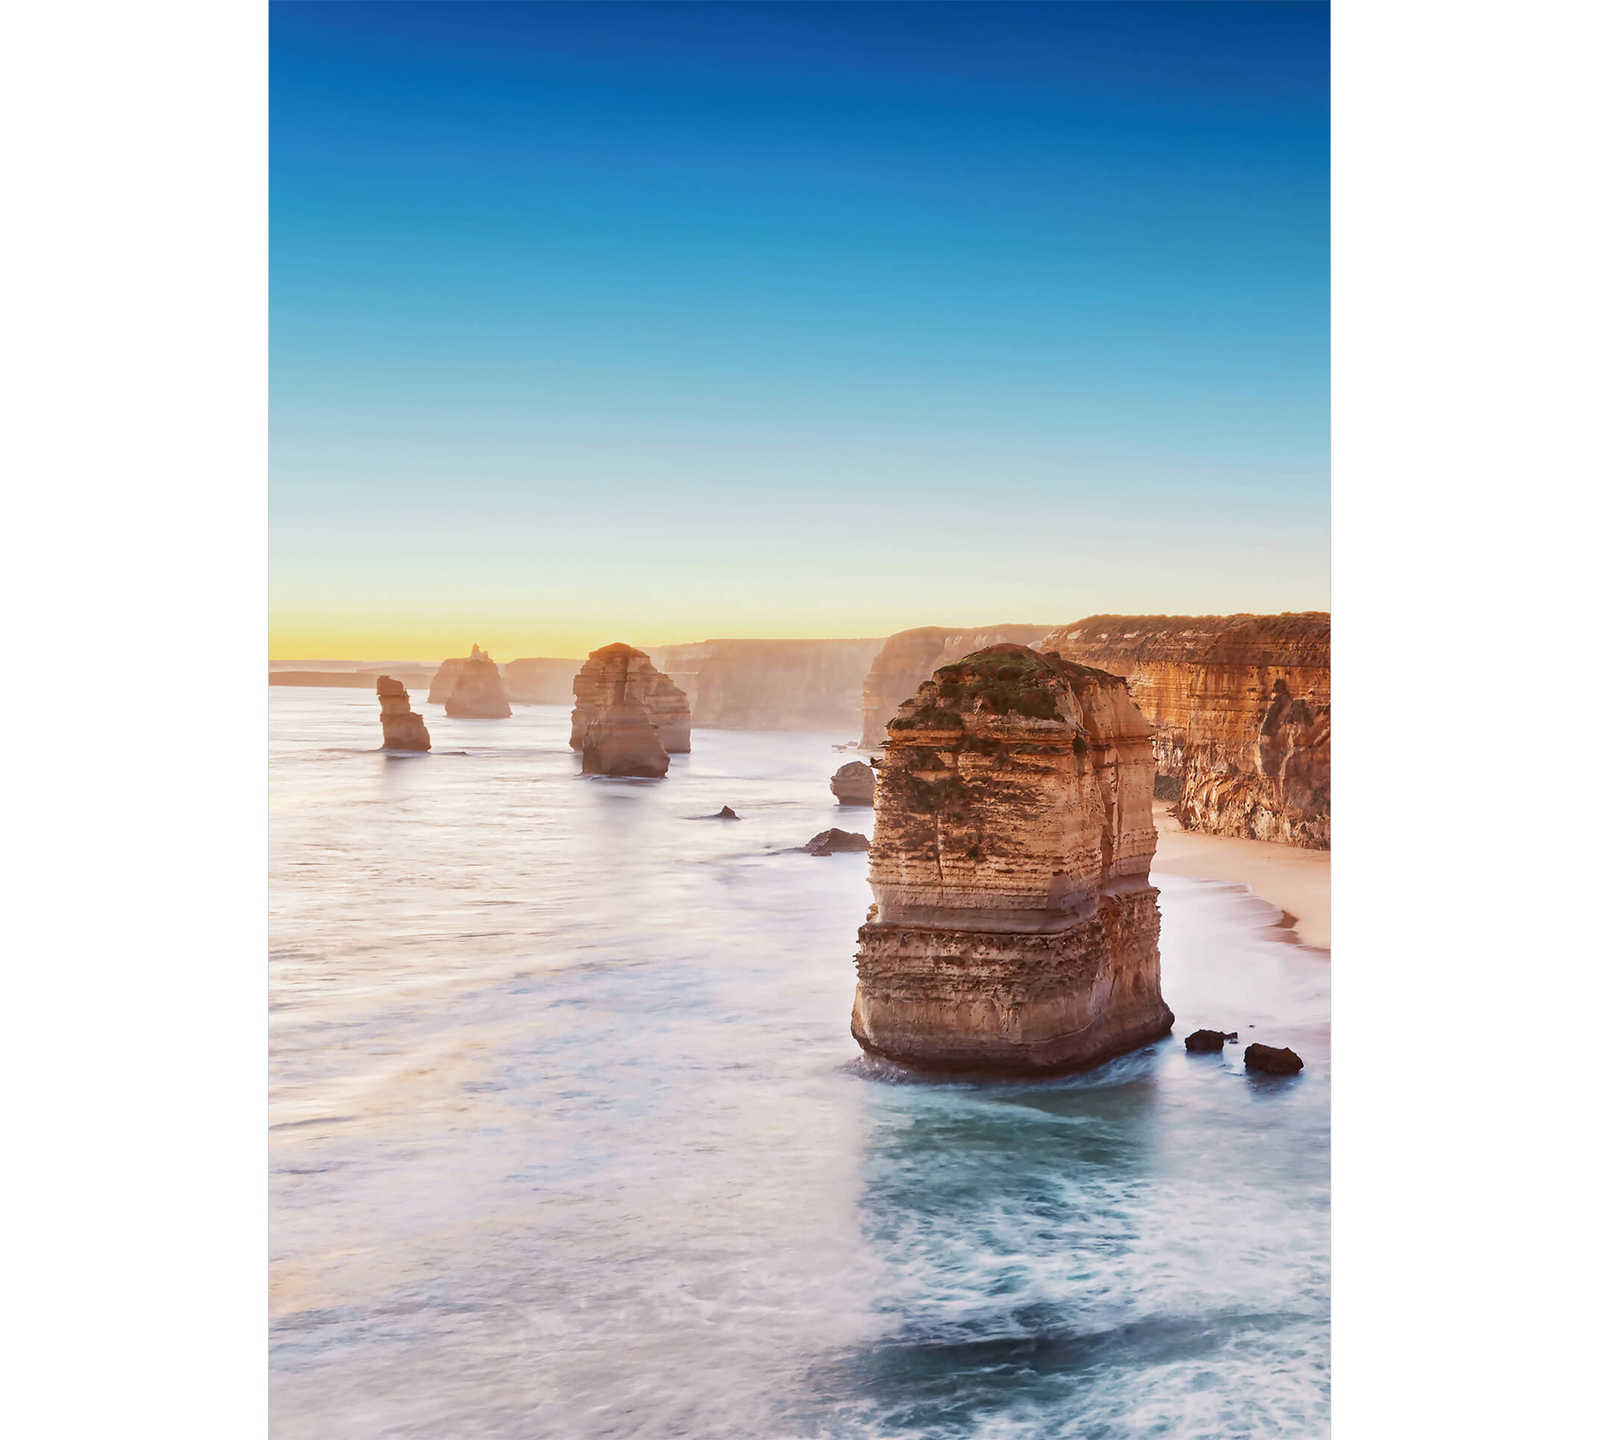 Photo wallpaper Cliffs in Australia - Yellow, Blue, Brown
